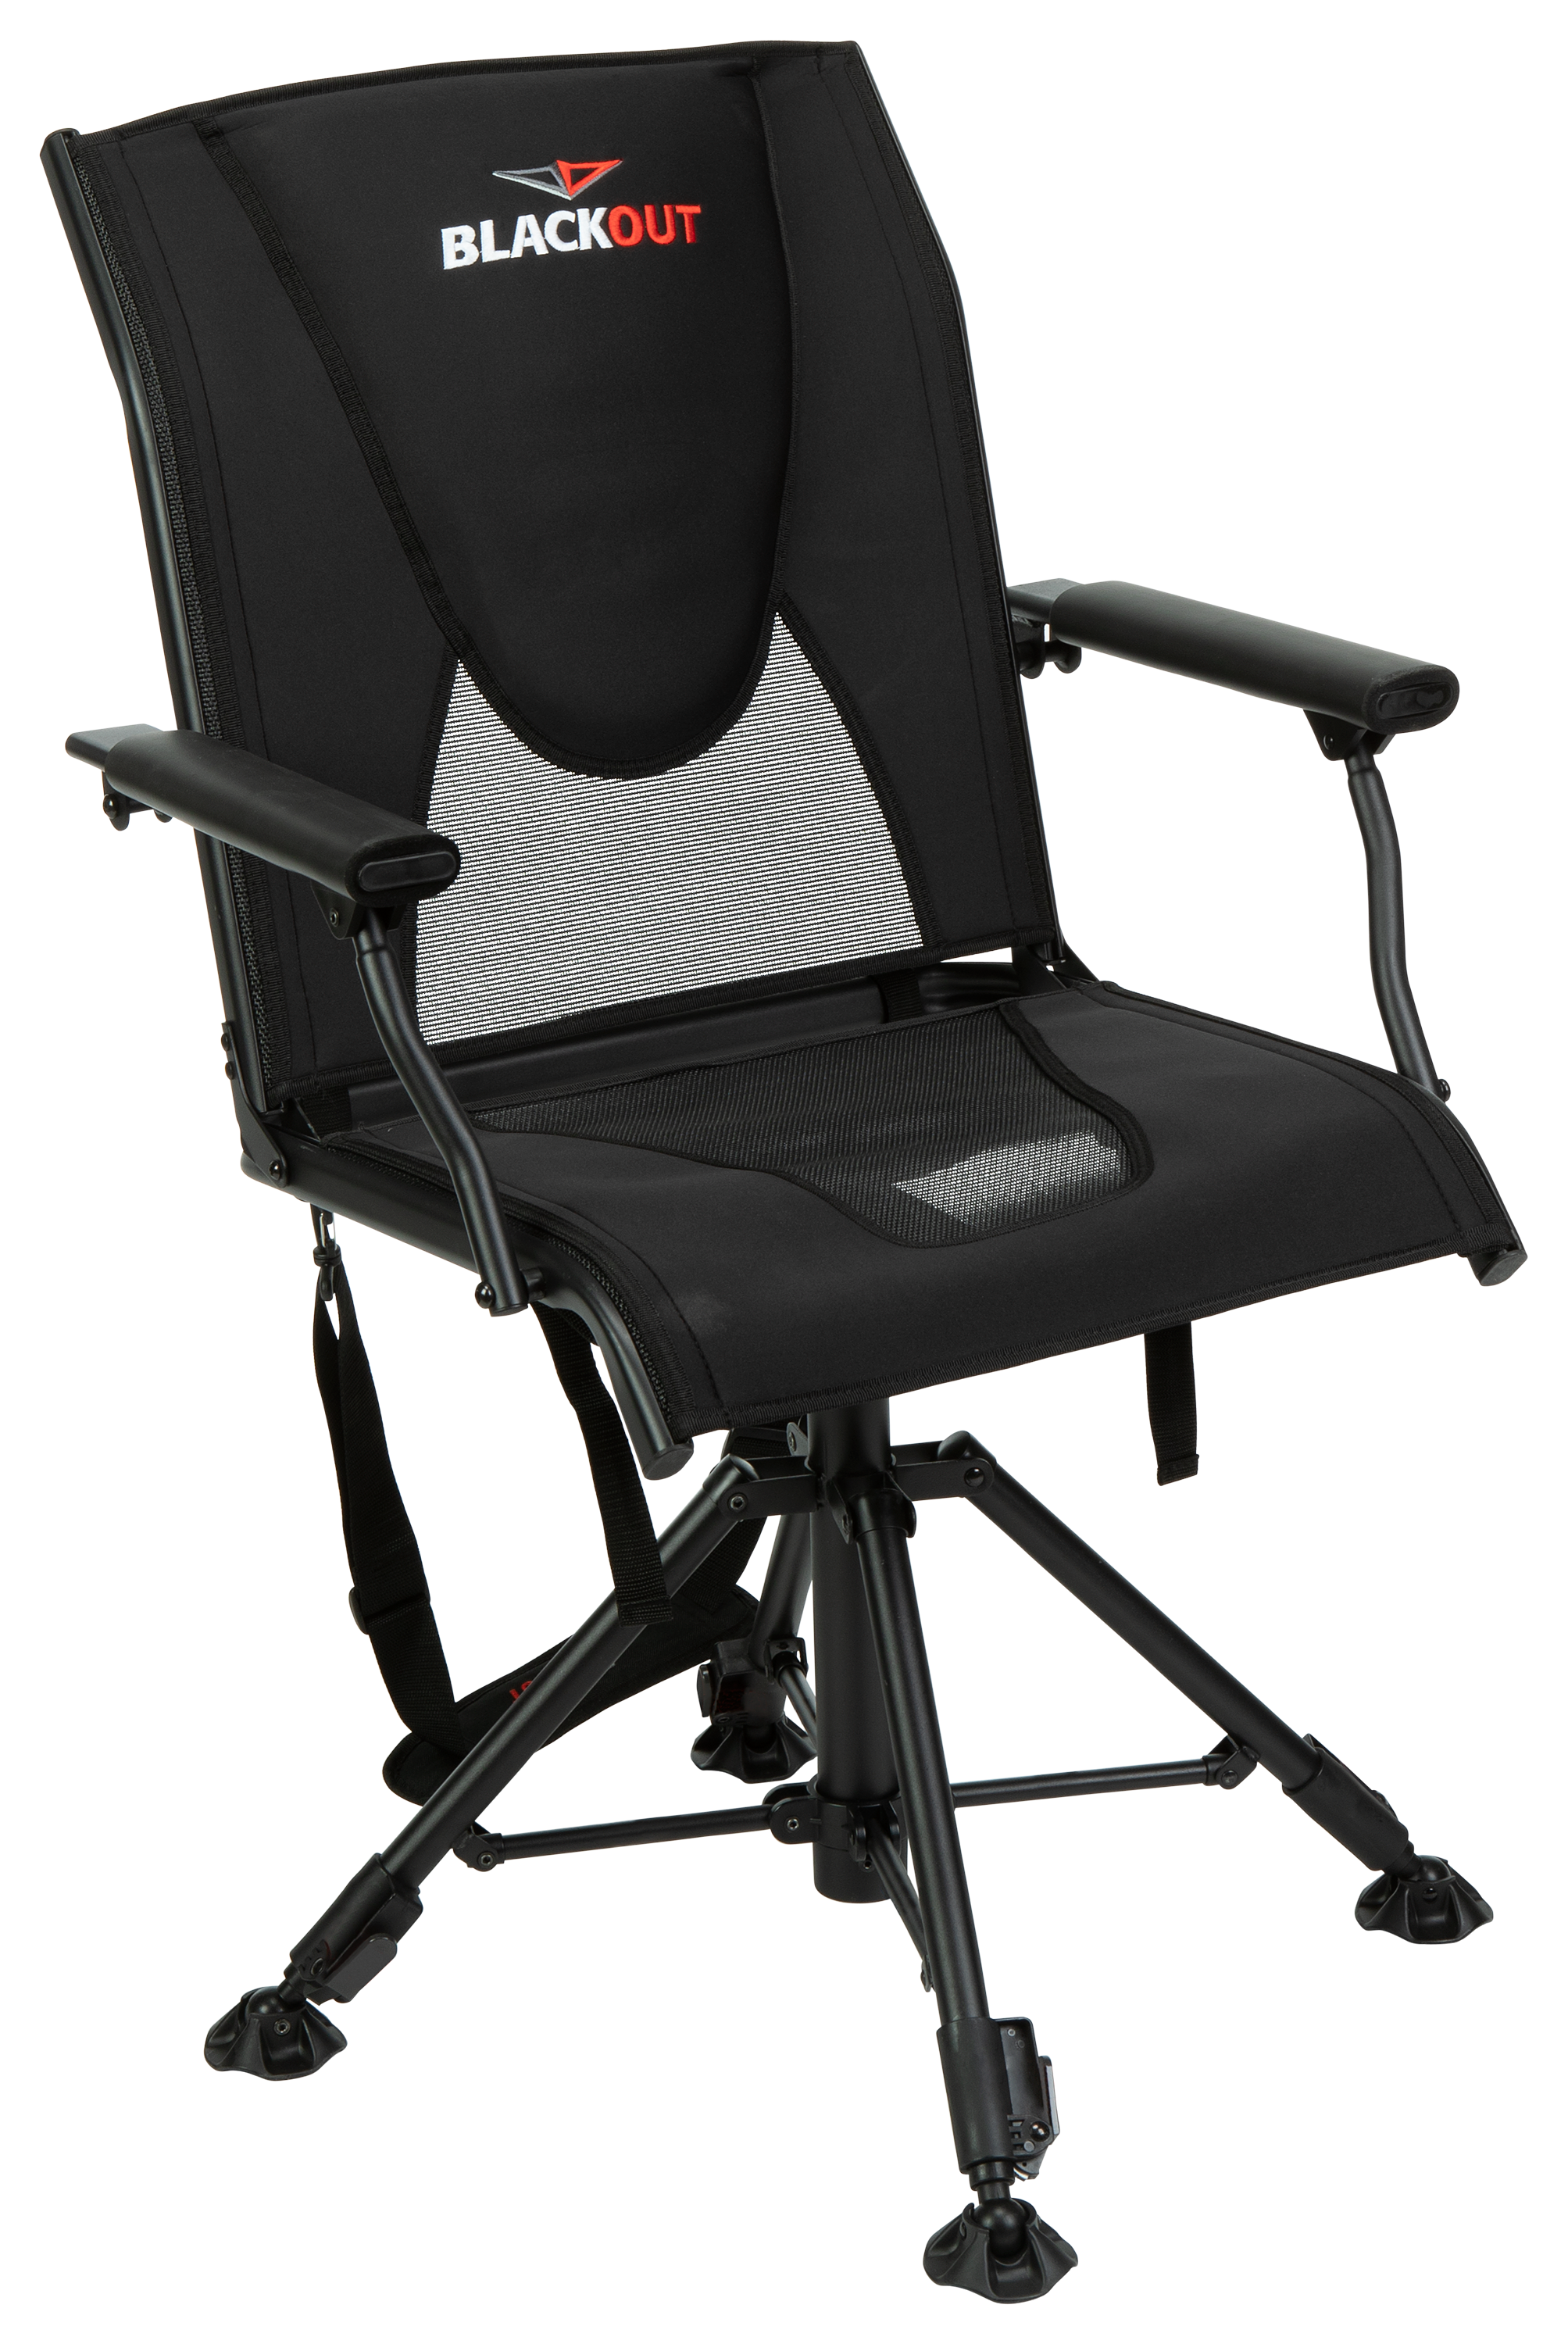 BlackOut Swivel Hard-Arm Chair